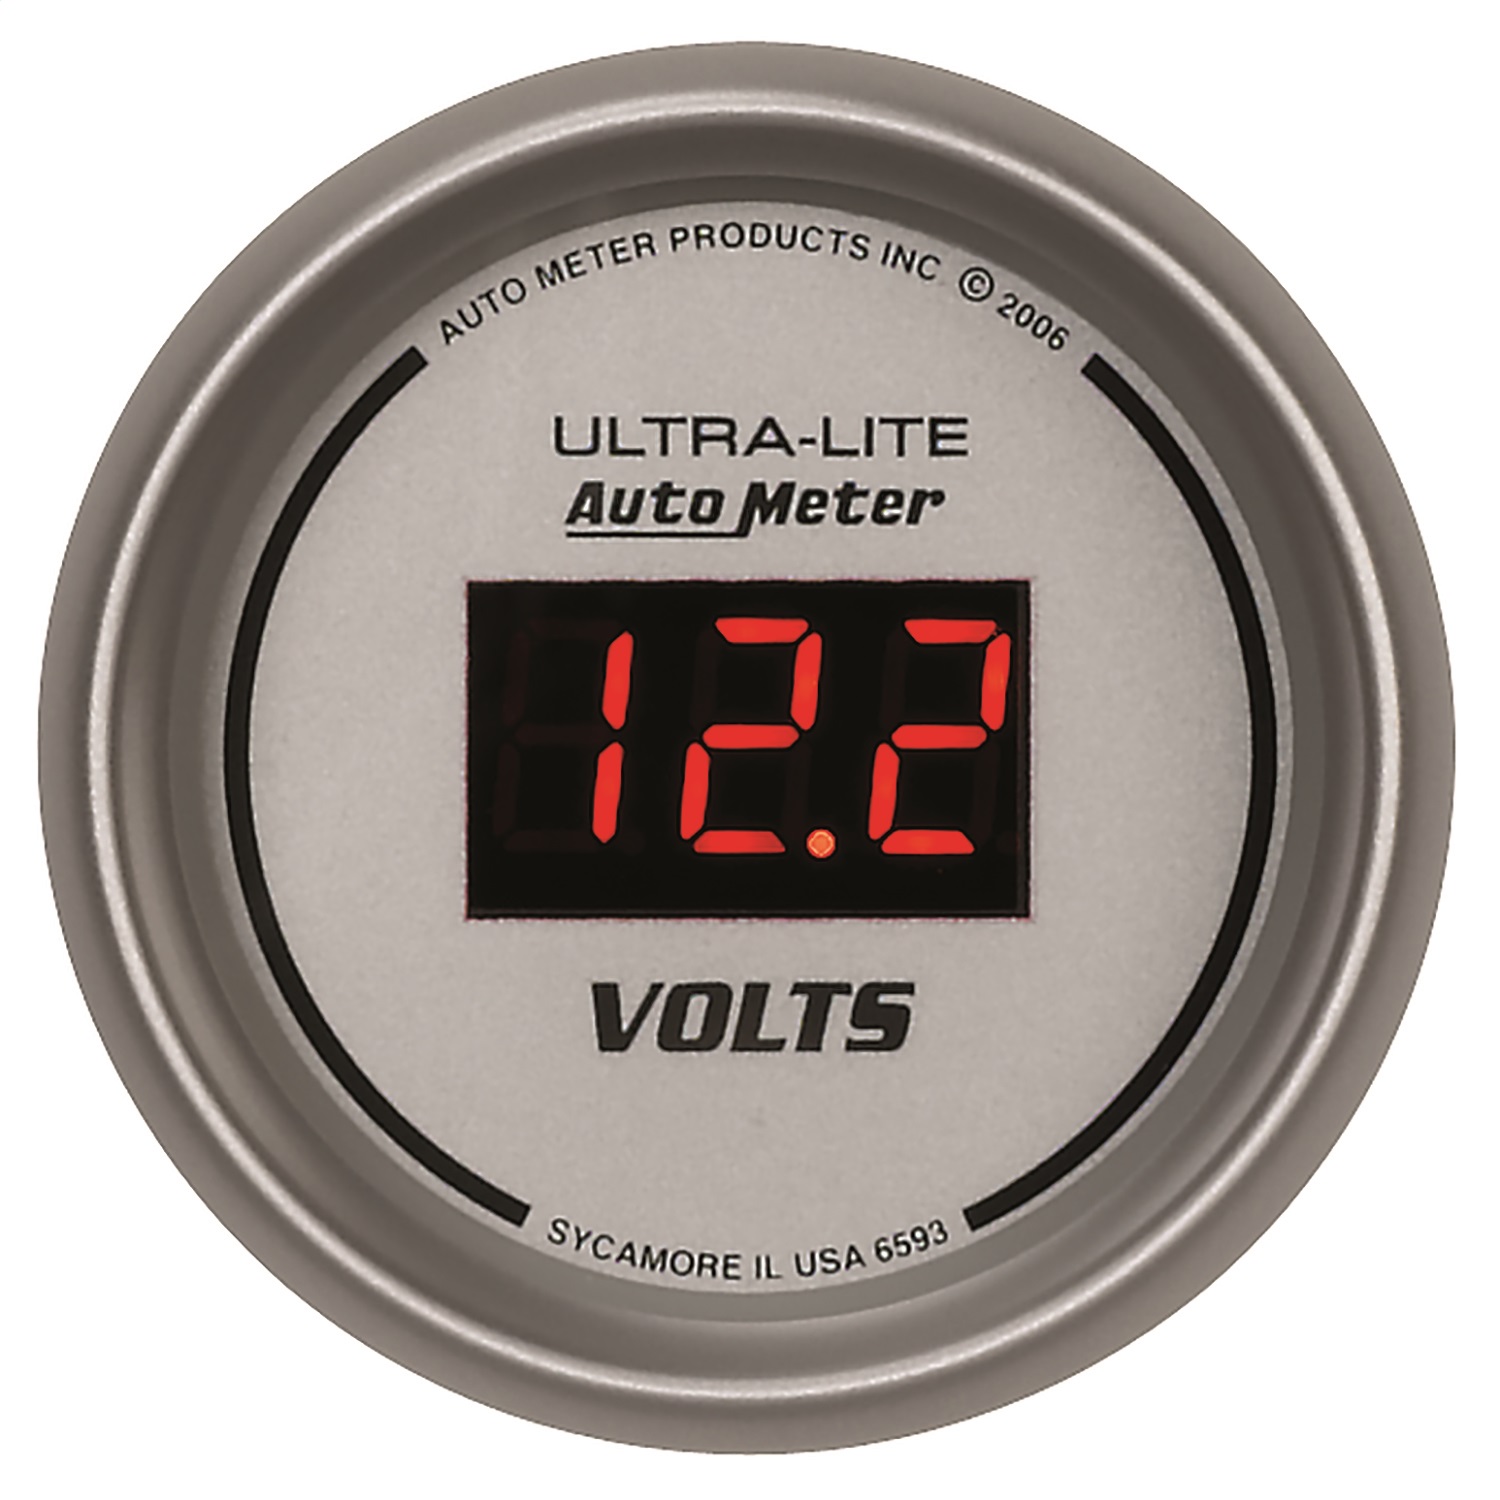 Auto Meter Auto Meter 6593 Ultra-Lite; Digital Voltmeter Gauge